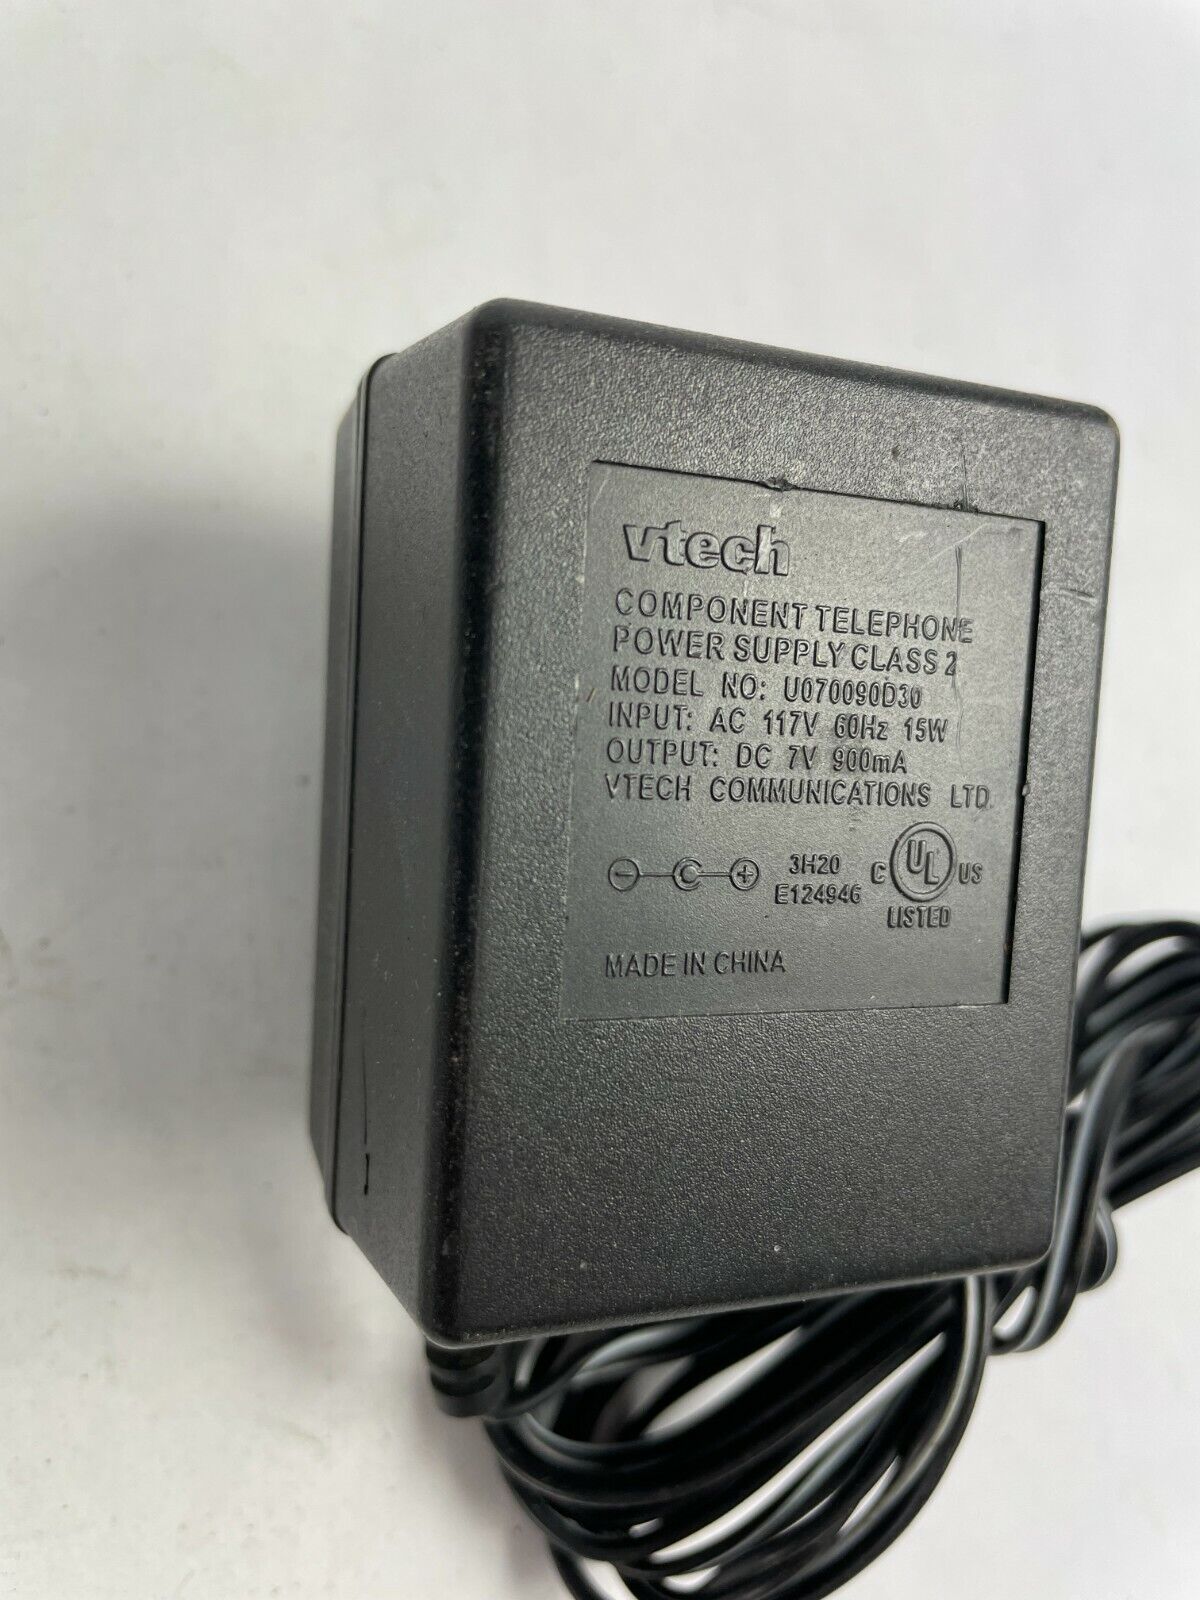 Genuine Vtech U070090D30 AC Adapter Output 7 V 900m A Power Supply Adapter Compatible Brand: Univ